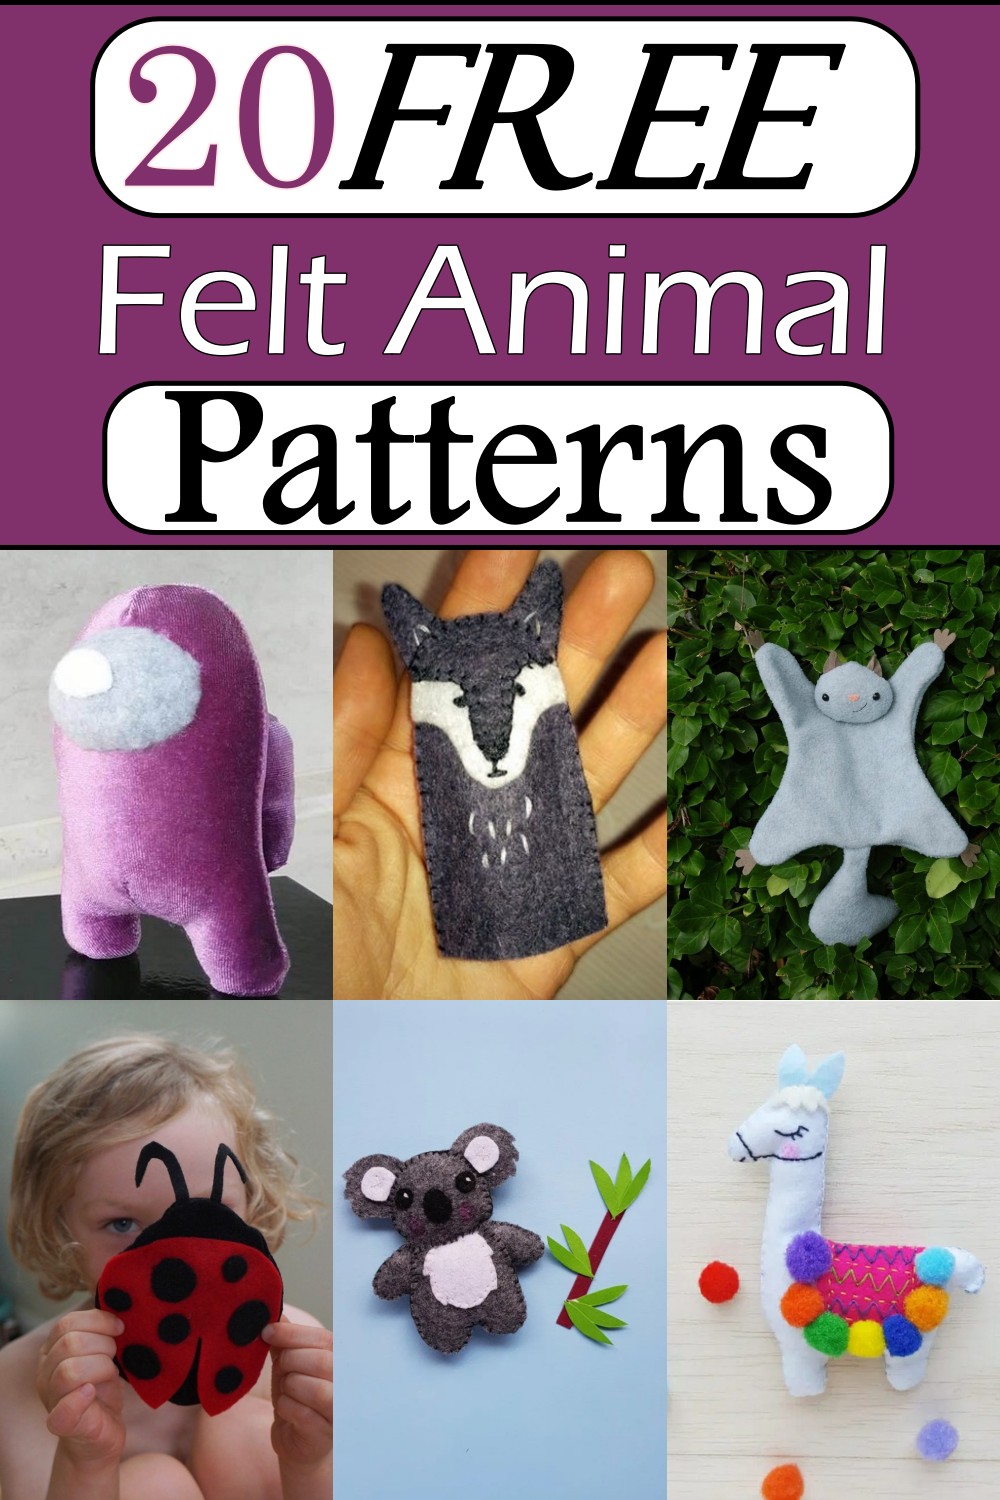 20 Free Felt Animal Patterns - Craftsy